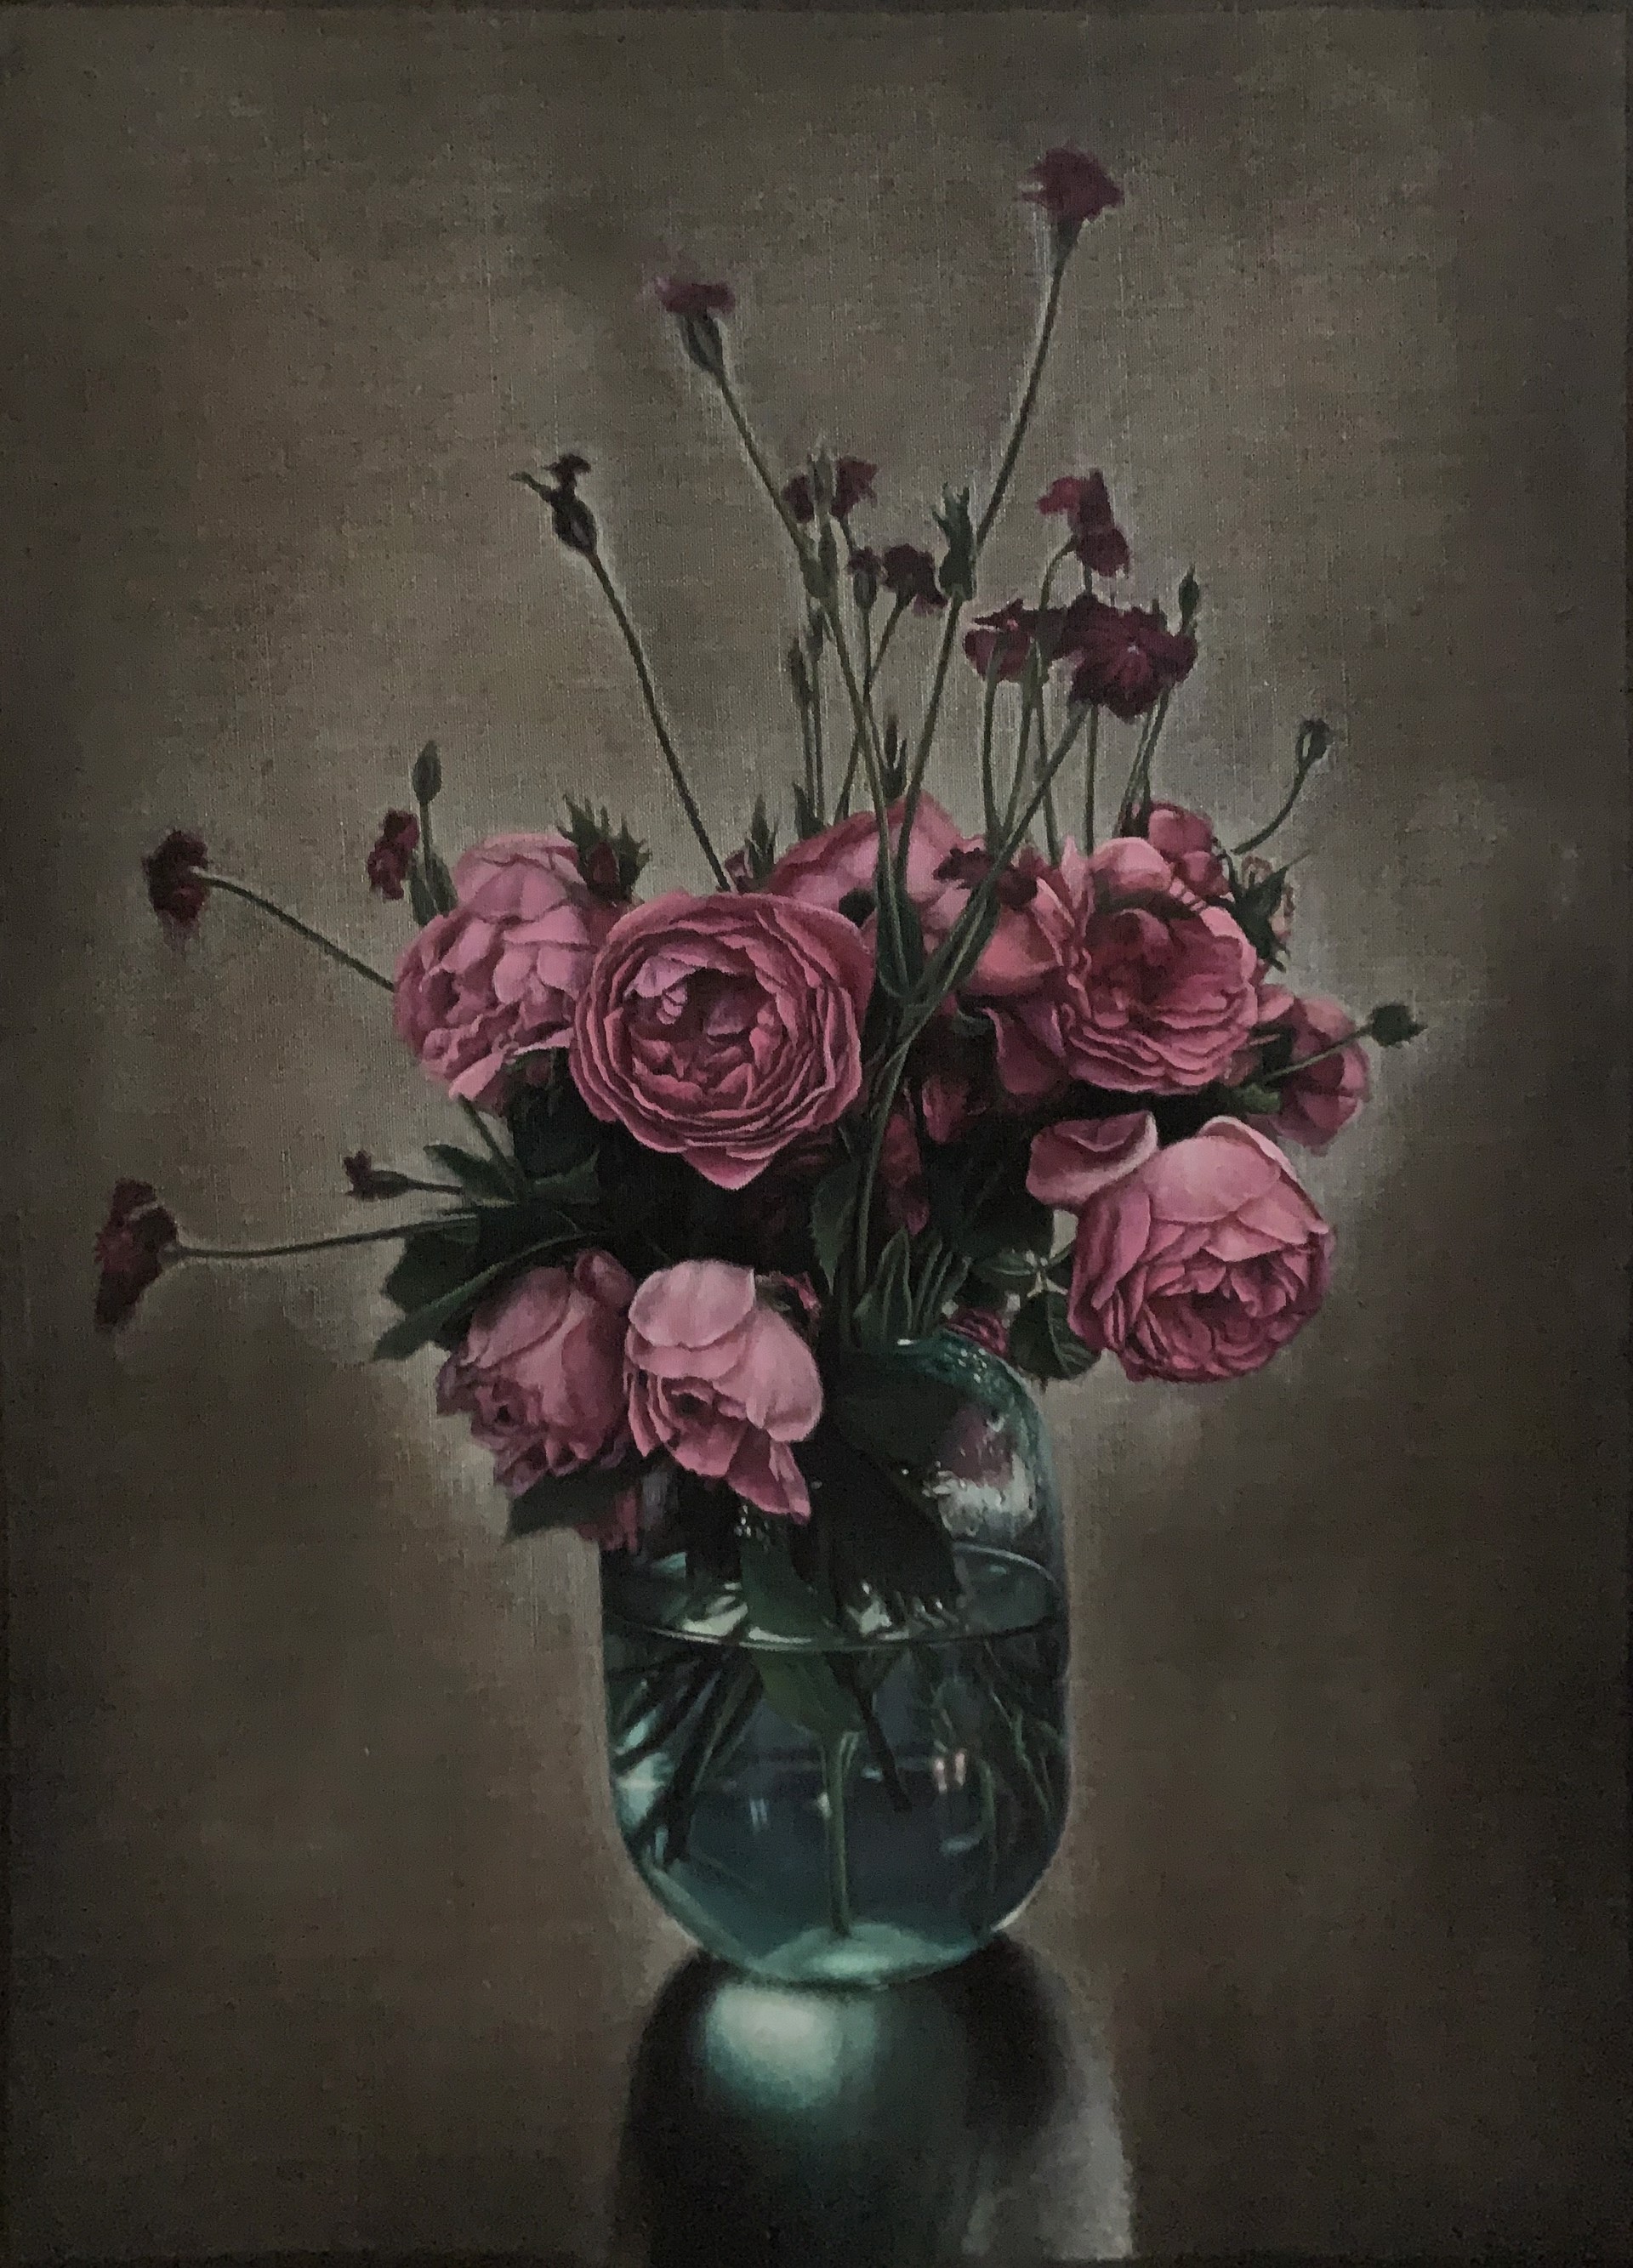 Blossoms' Twilight by Larissa Morais